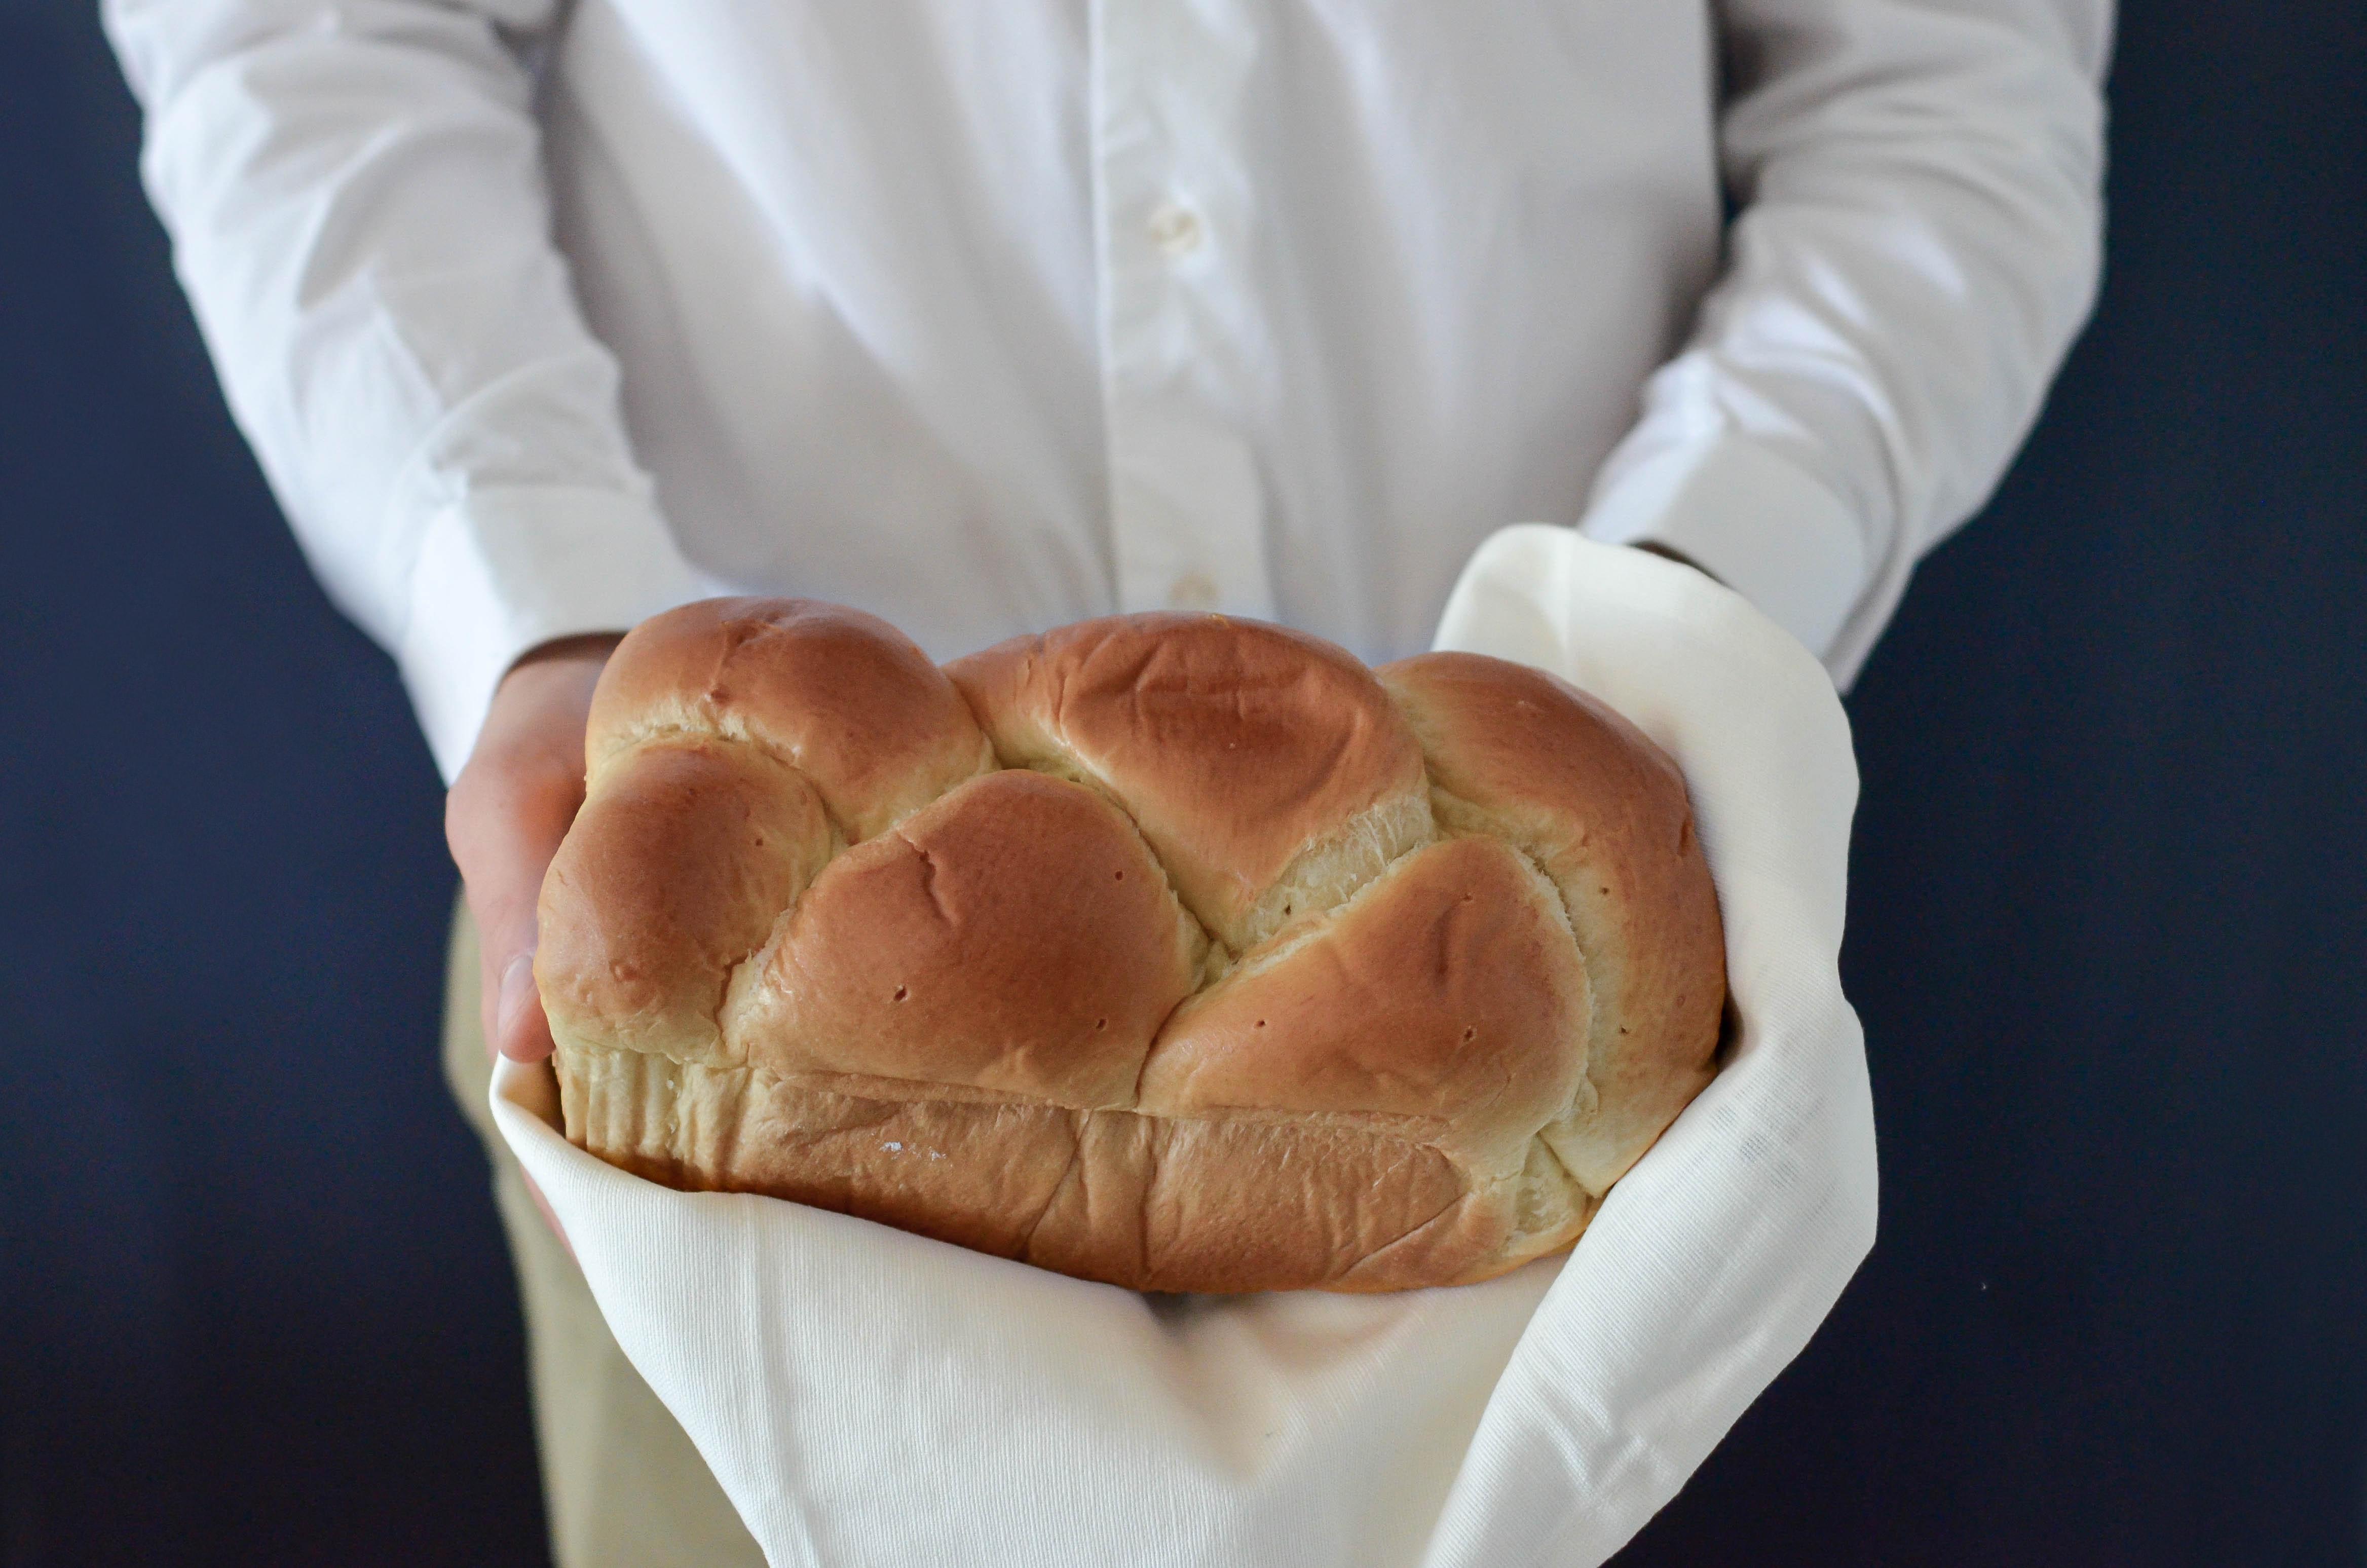 Купи две булочки. Булочки. Хлеб булочки. Булка хлеба. Булочка в руке.